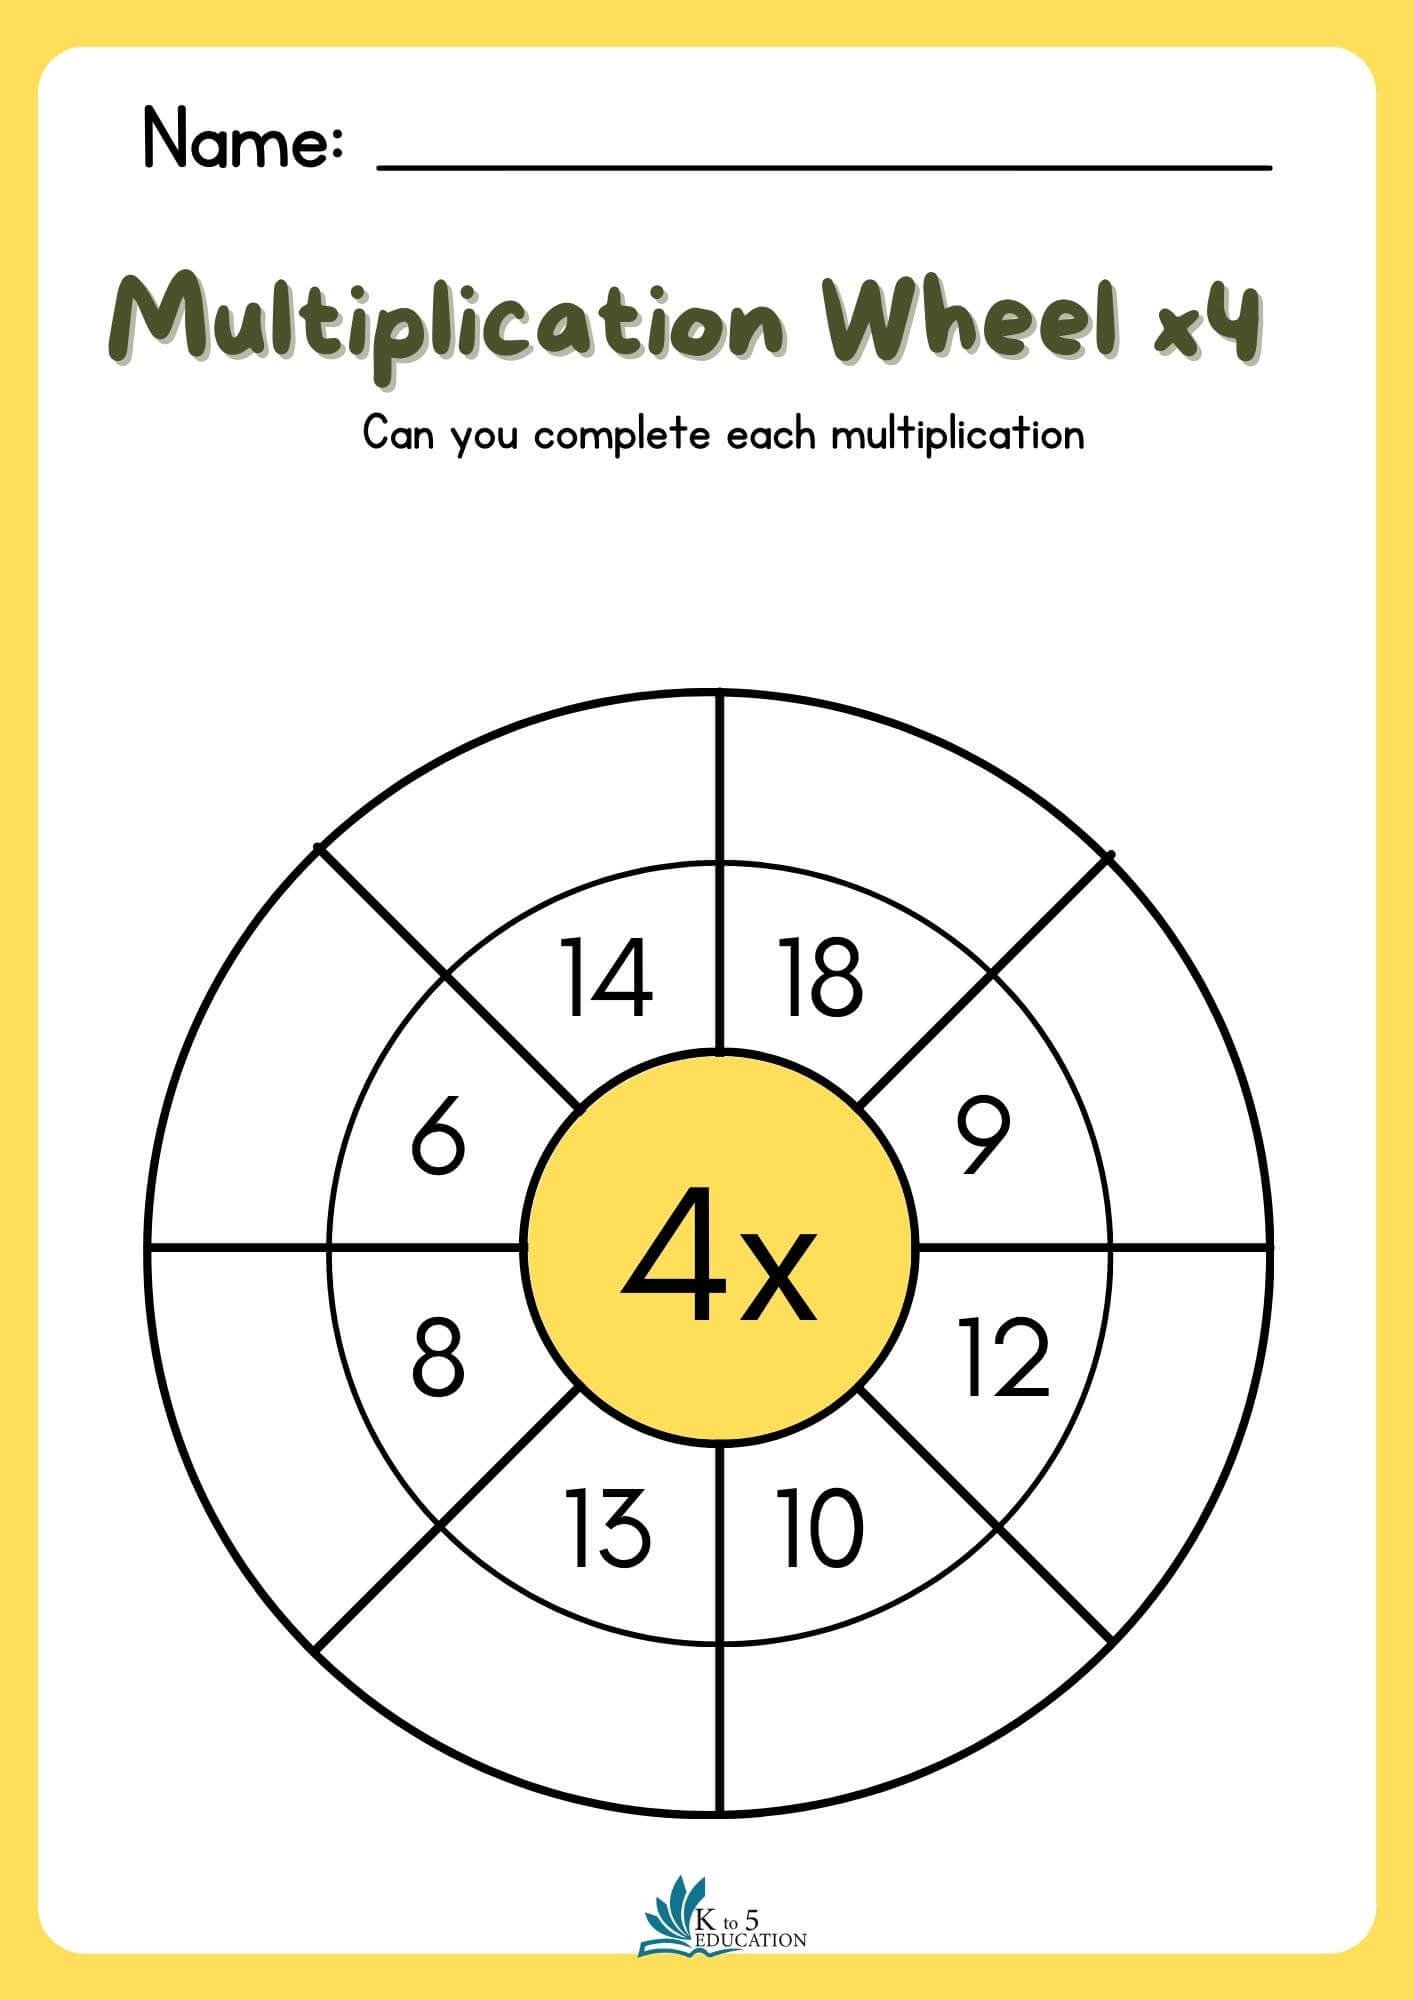 Multiplication Wheel x4 Worksheet